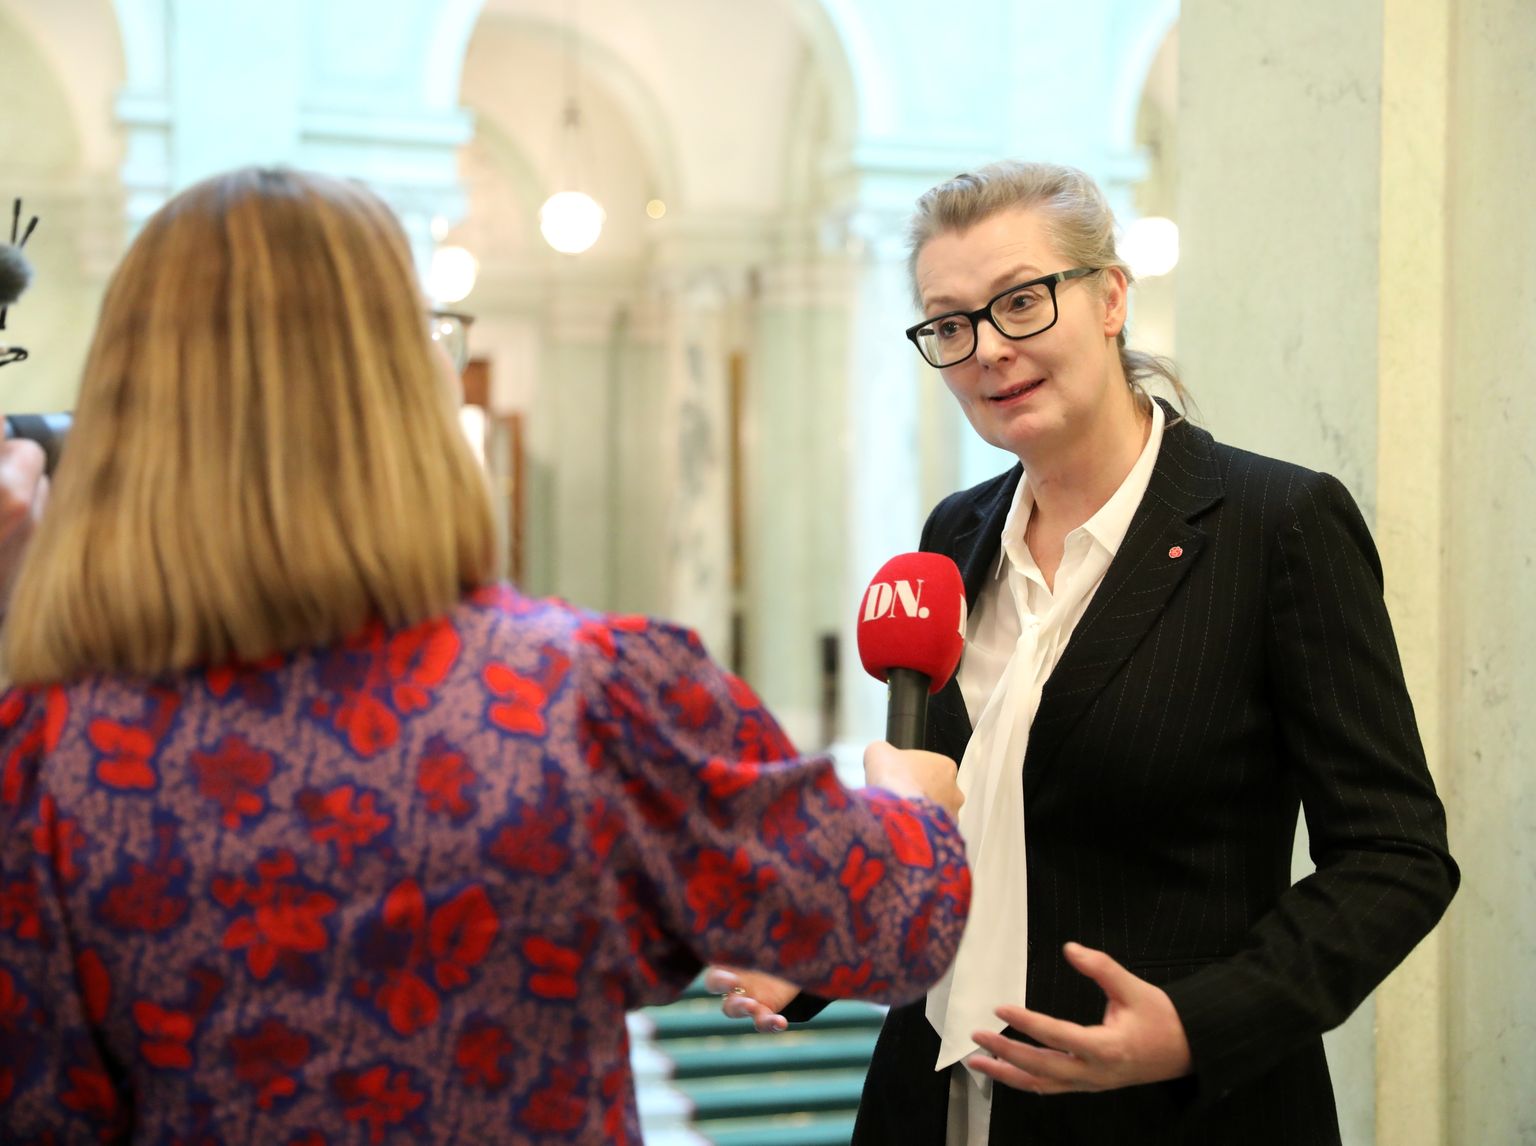 Rootsi haridusminister Lina Axelsson Kihlblom